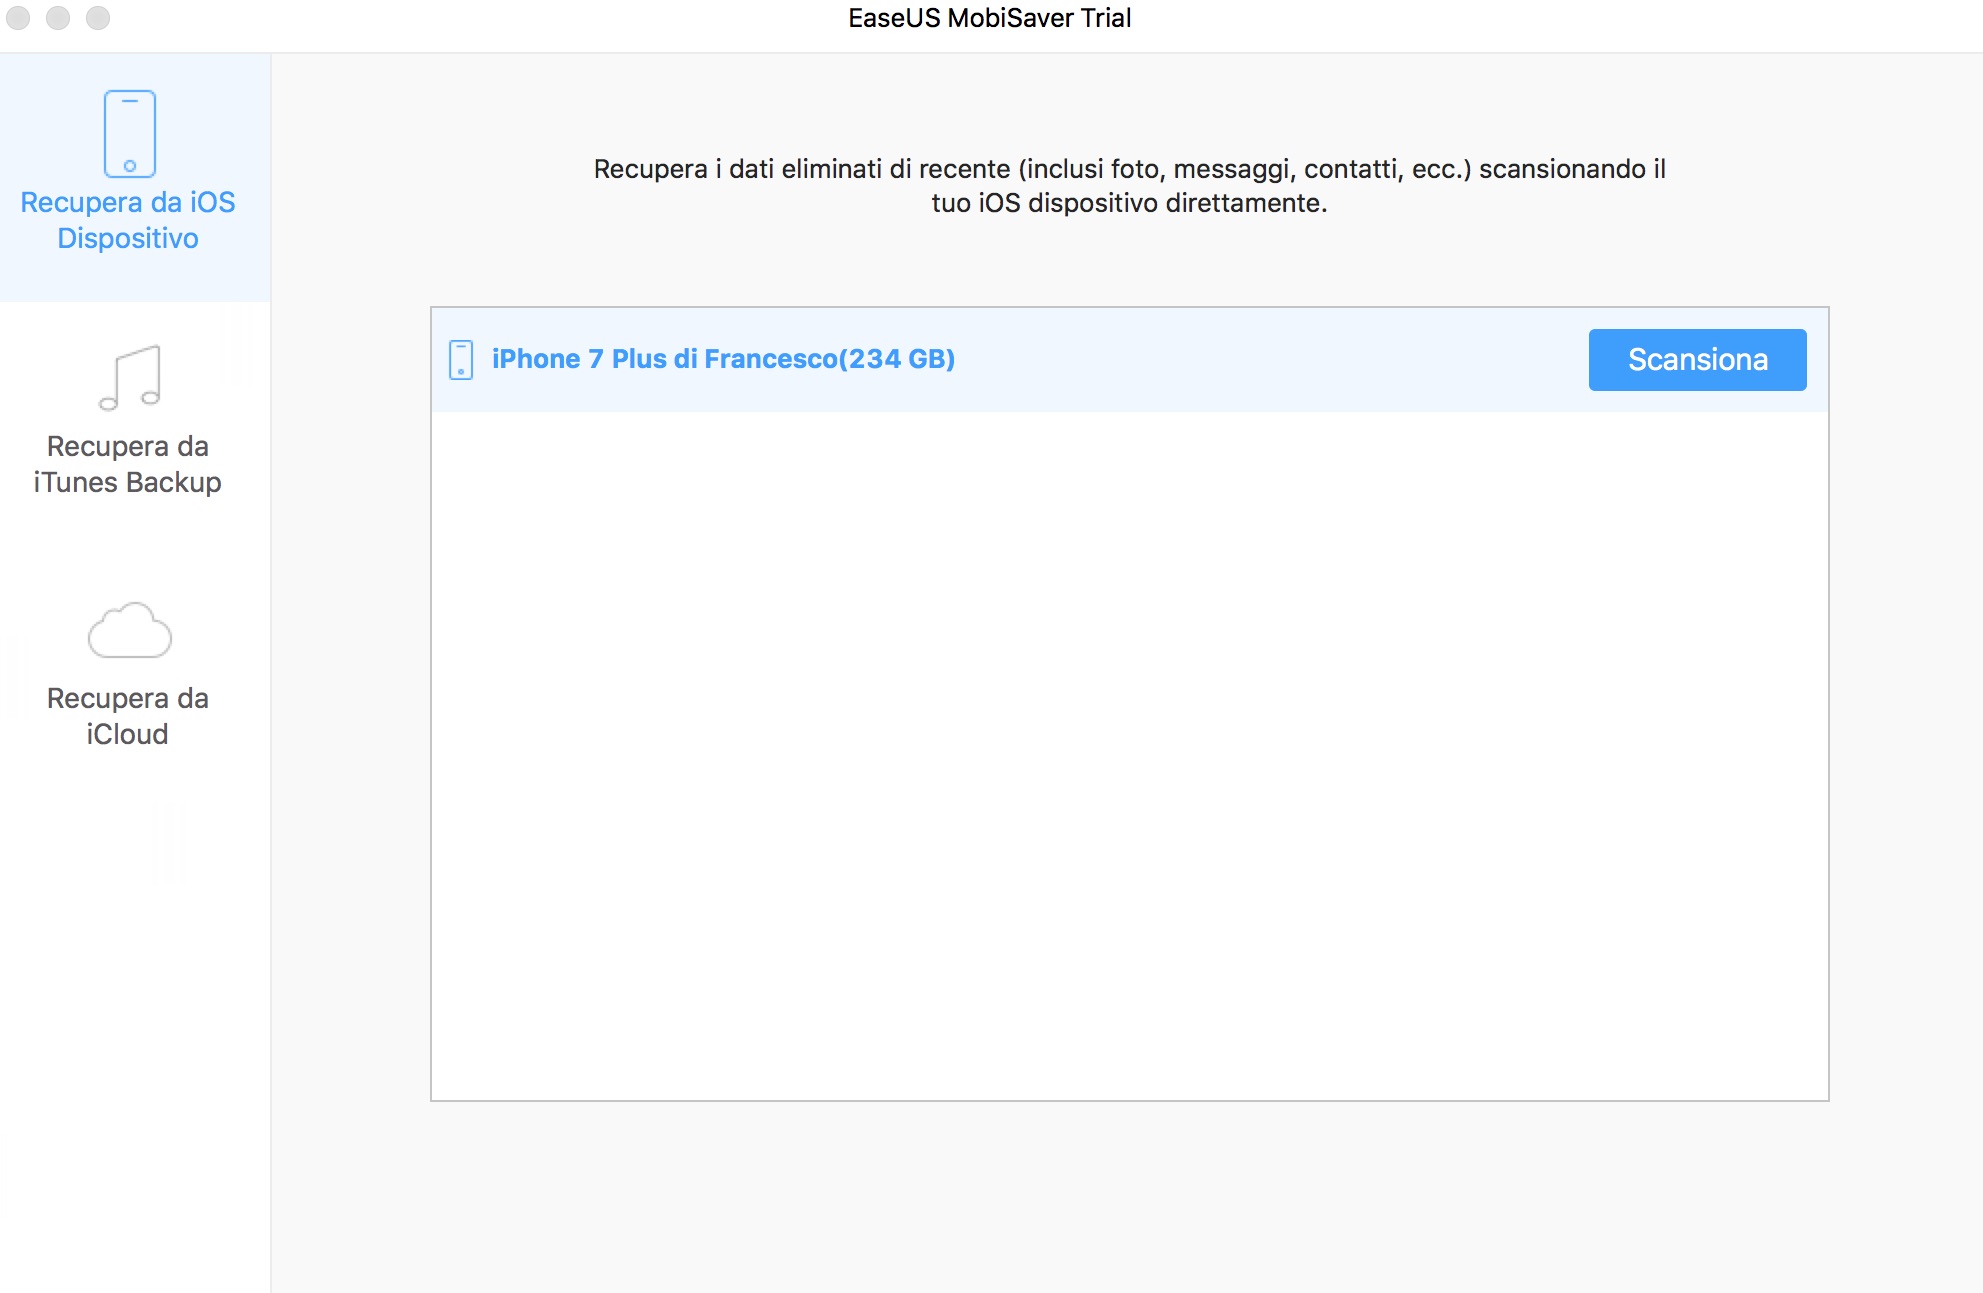 Iperius Backup Full 7.8.8 for iphone download